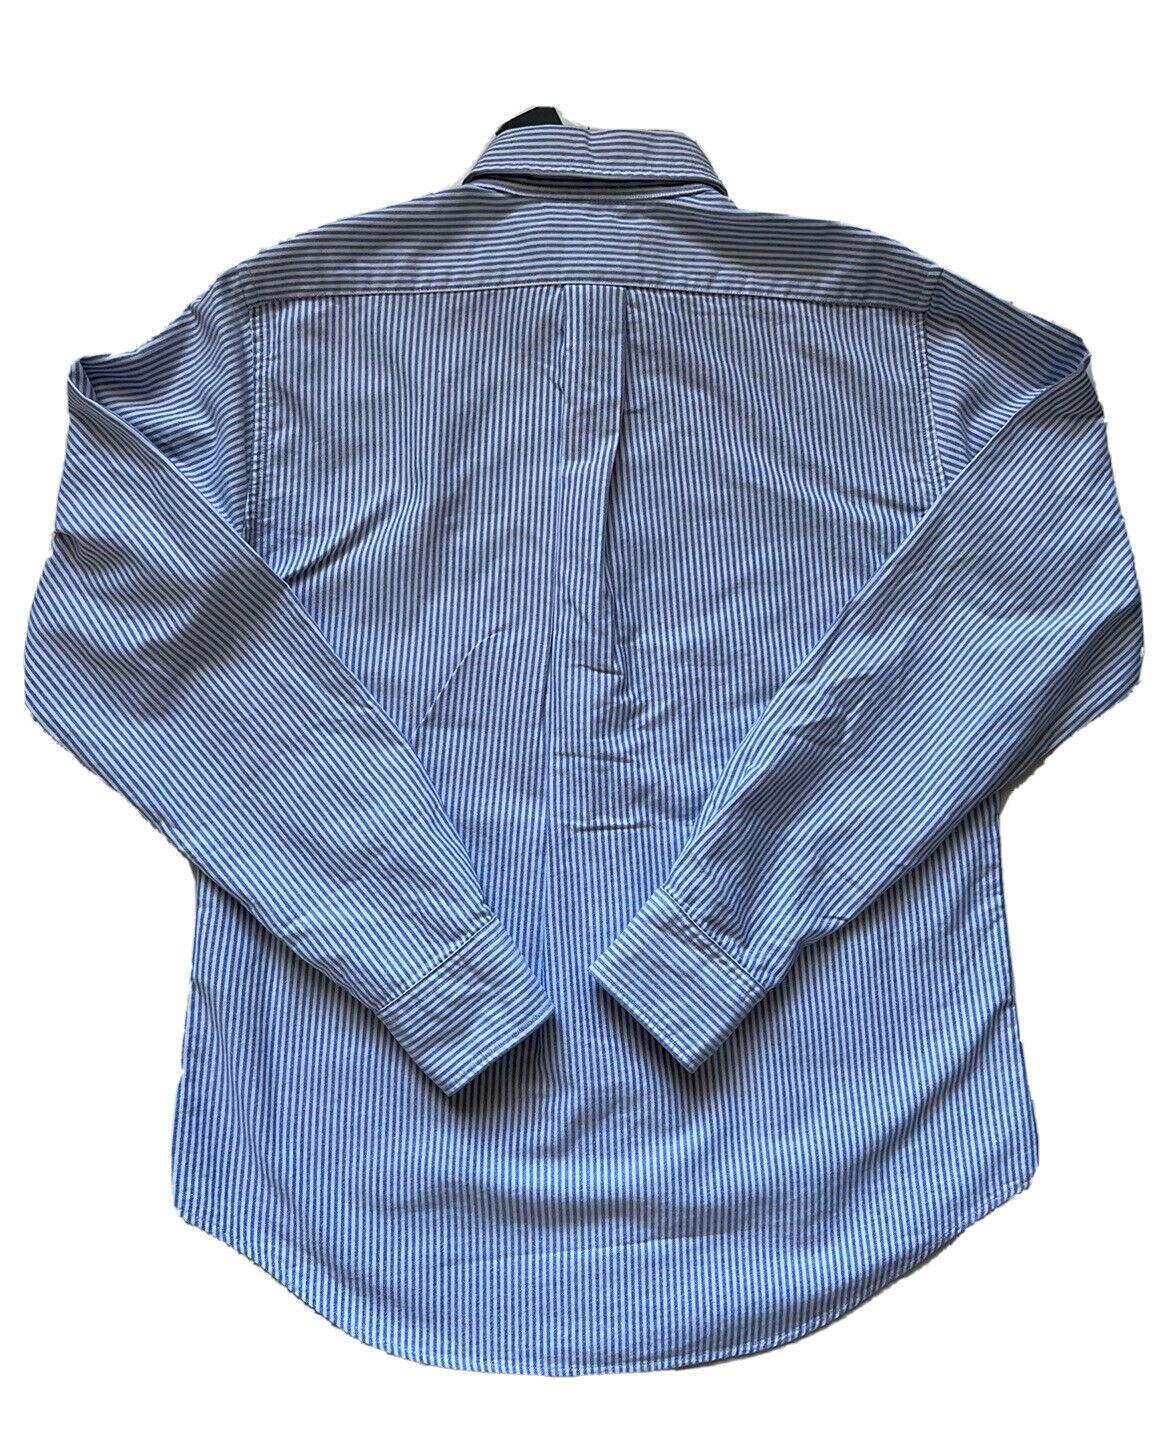 NWT $89 Ralph Lauren Men's Classic Fit White/Blue Stripes Dress Shirt Small